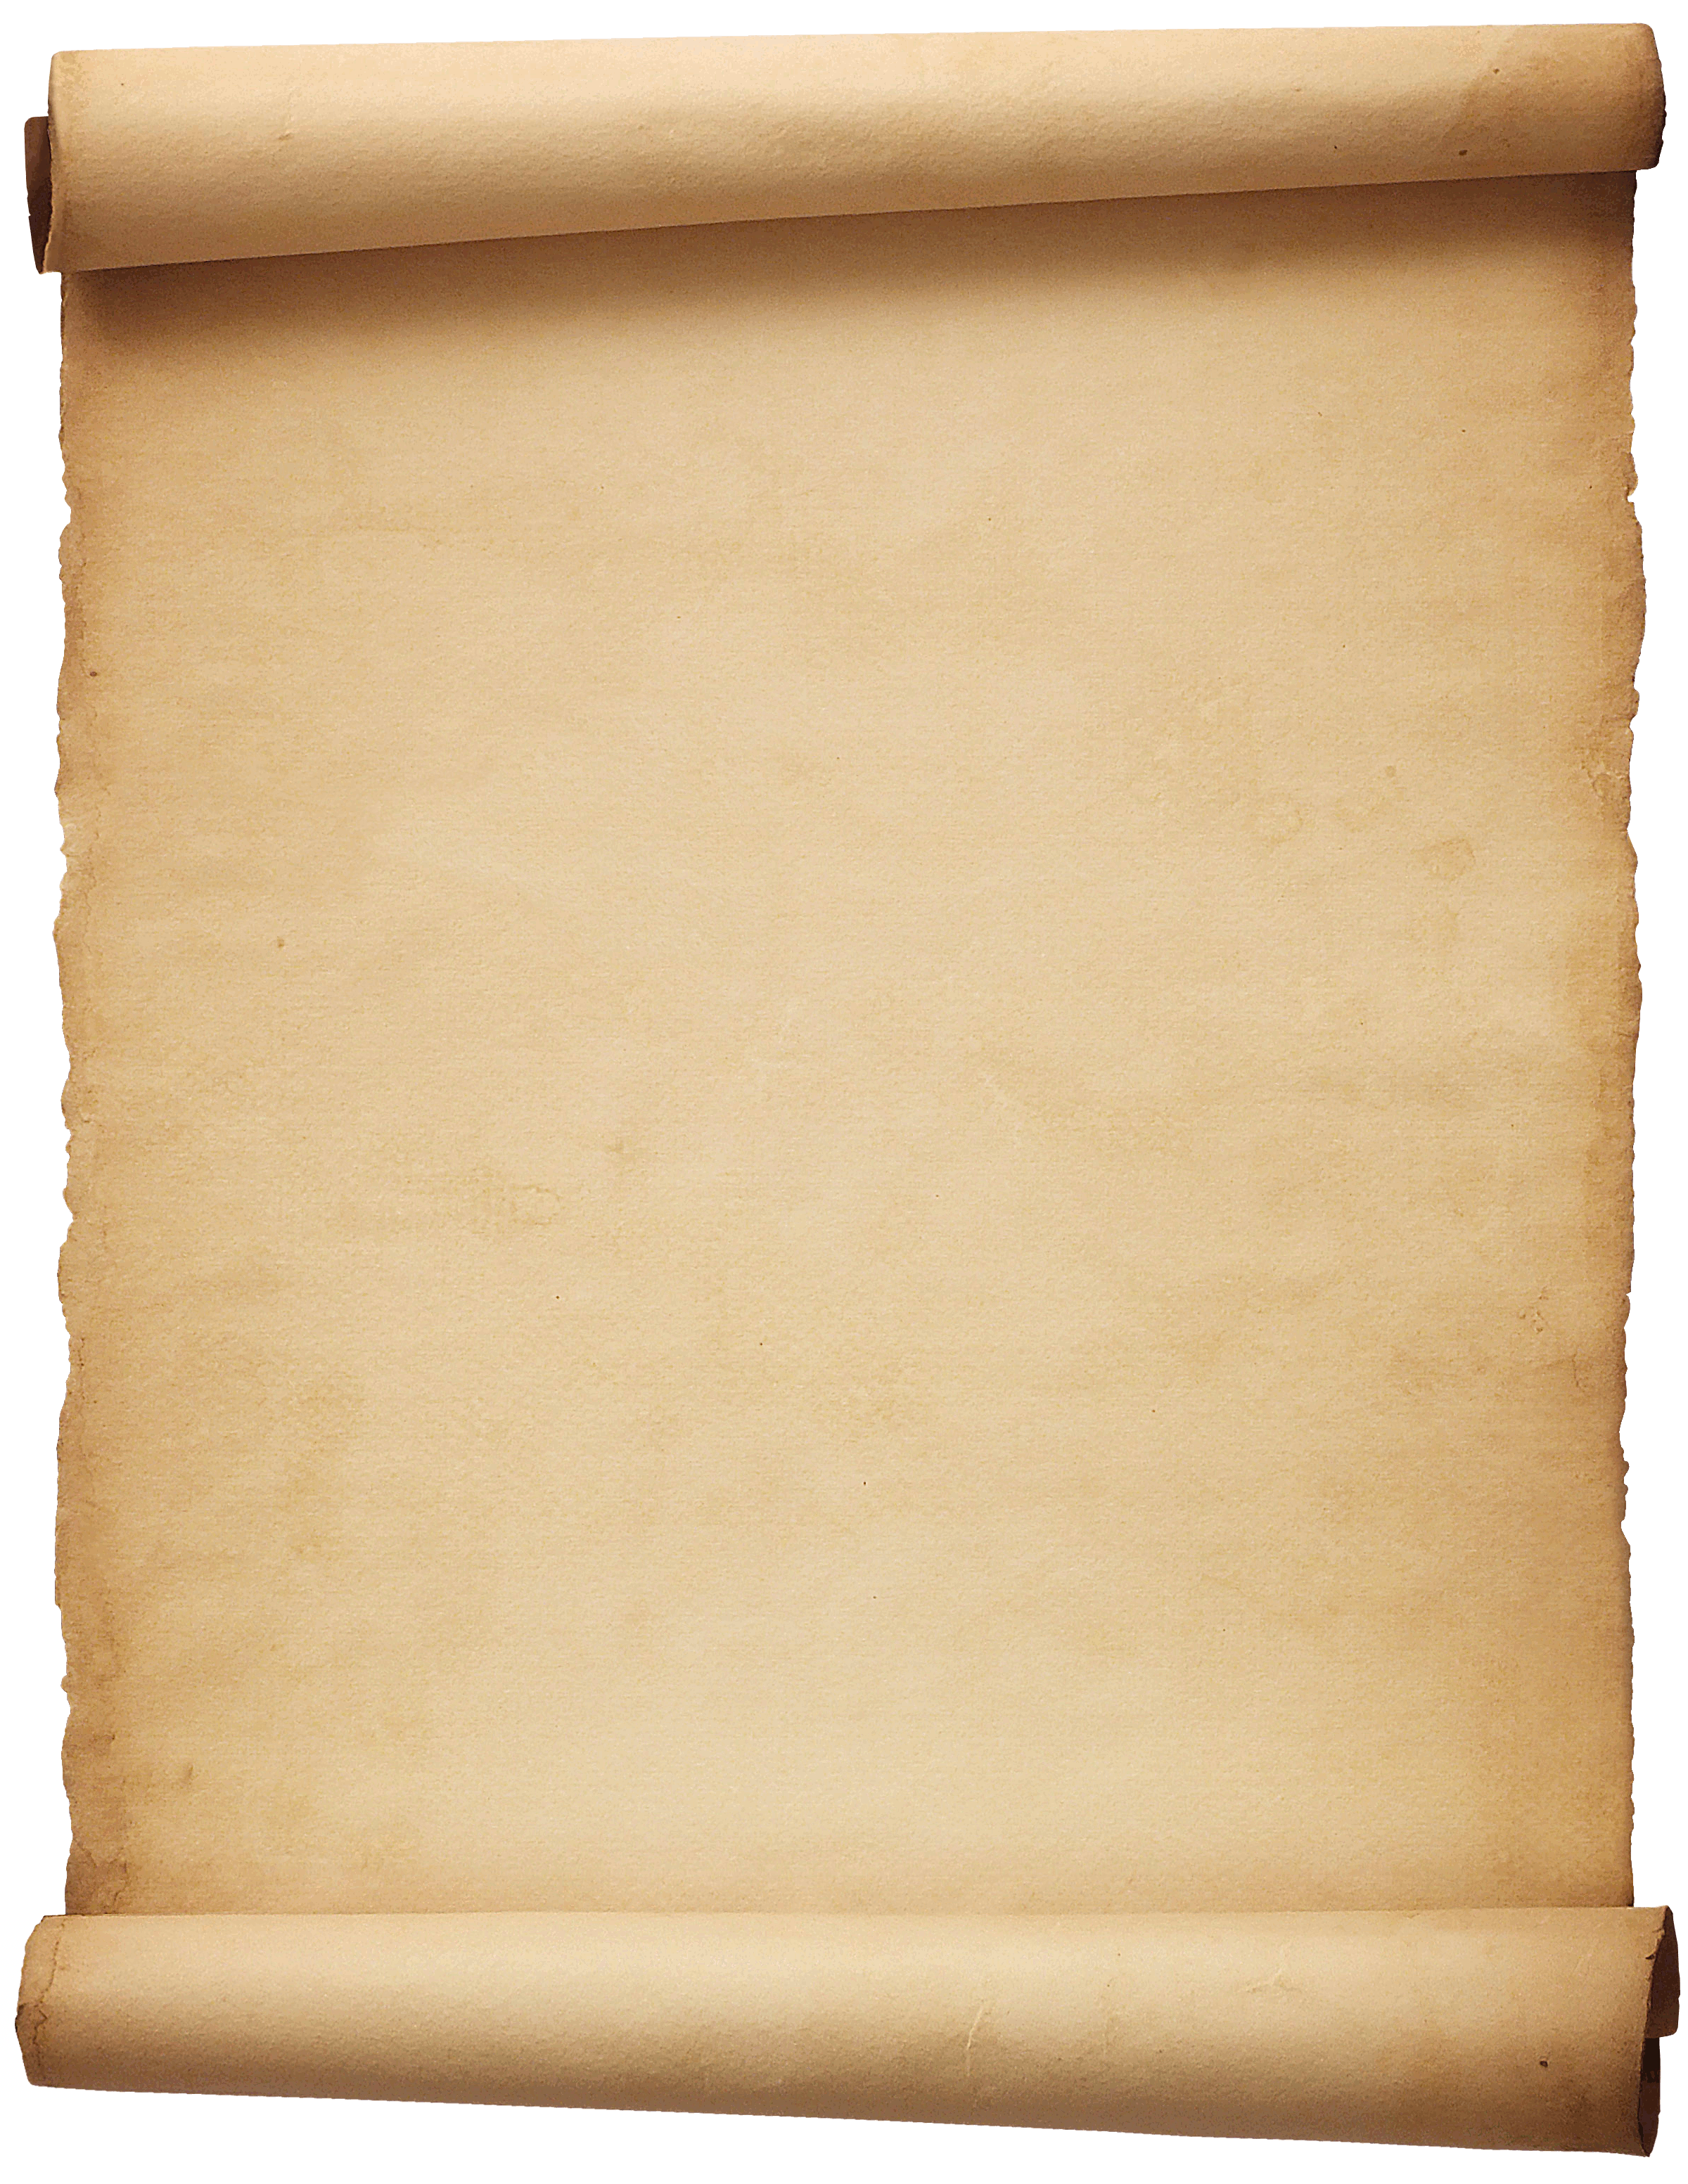 Free parchment paper background image